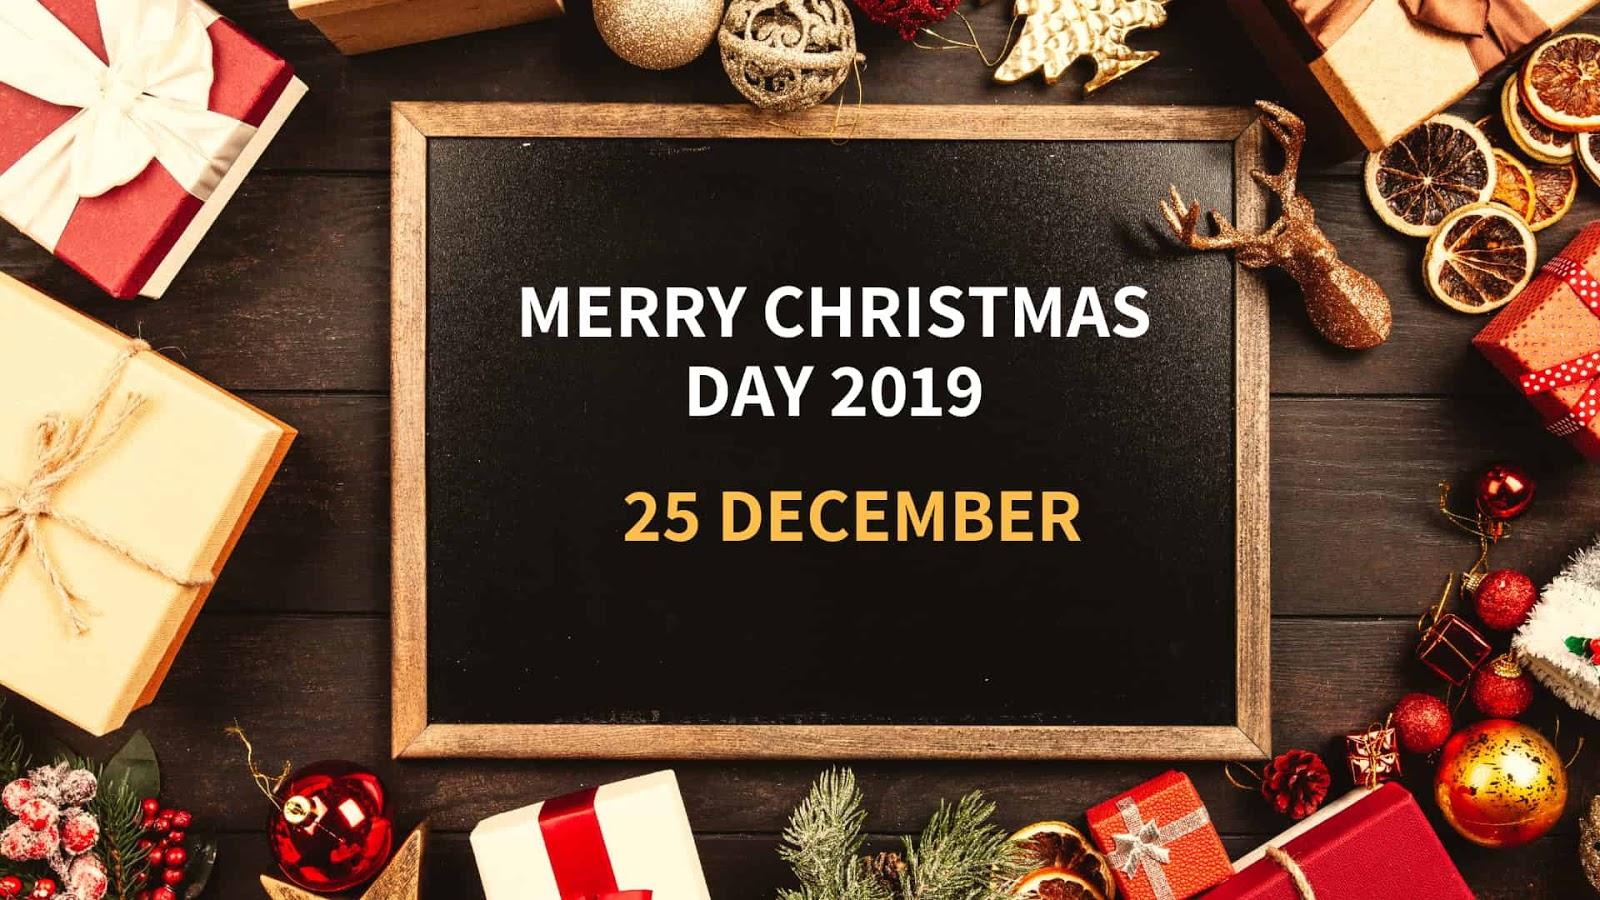 Happy Christmas Image 2019: Merry Christmas Day 2019 Image